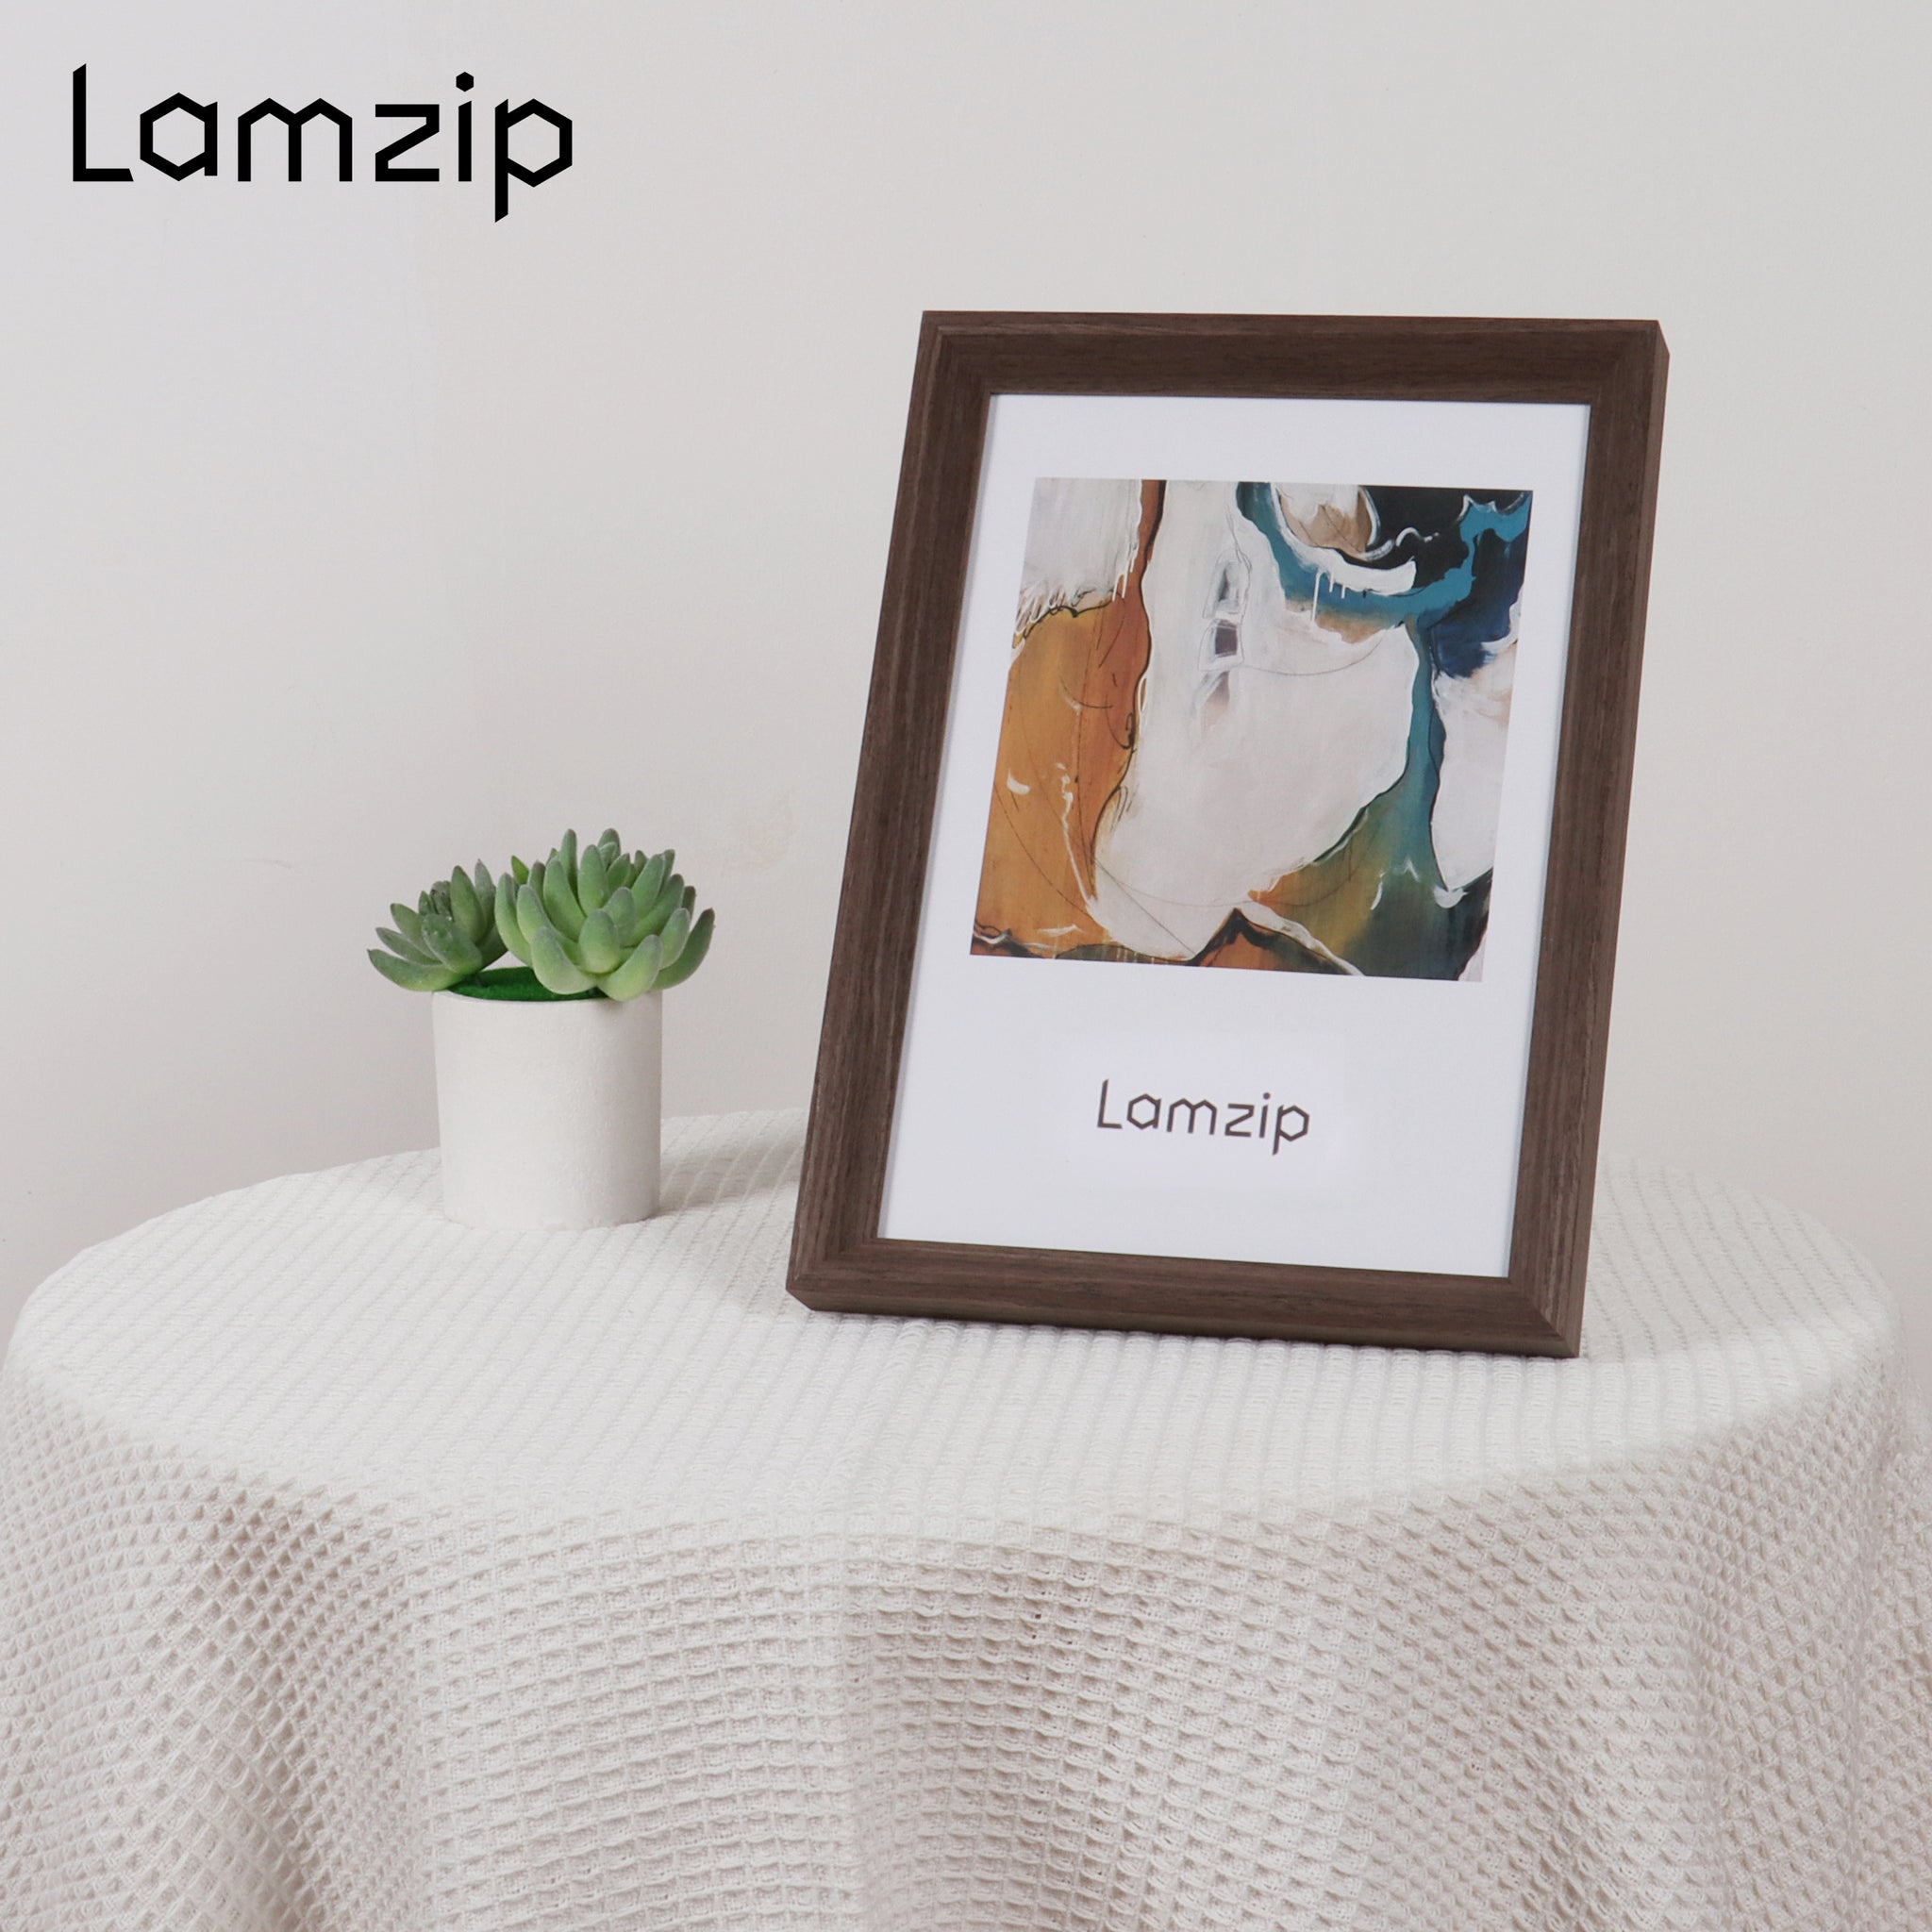 Lamzip Rustic Picture Frame